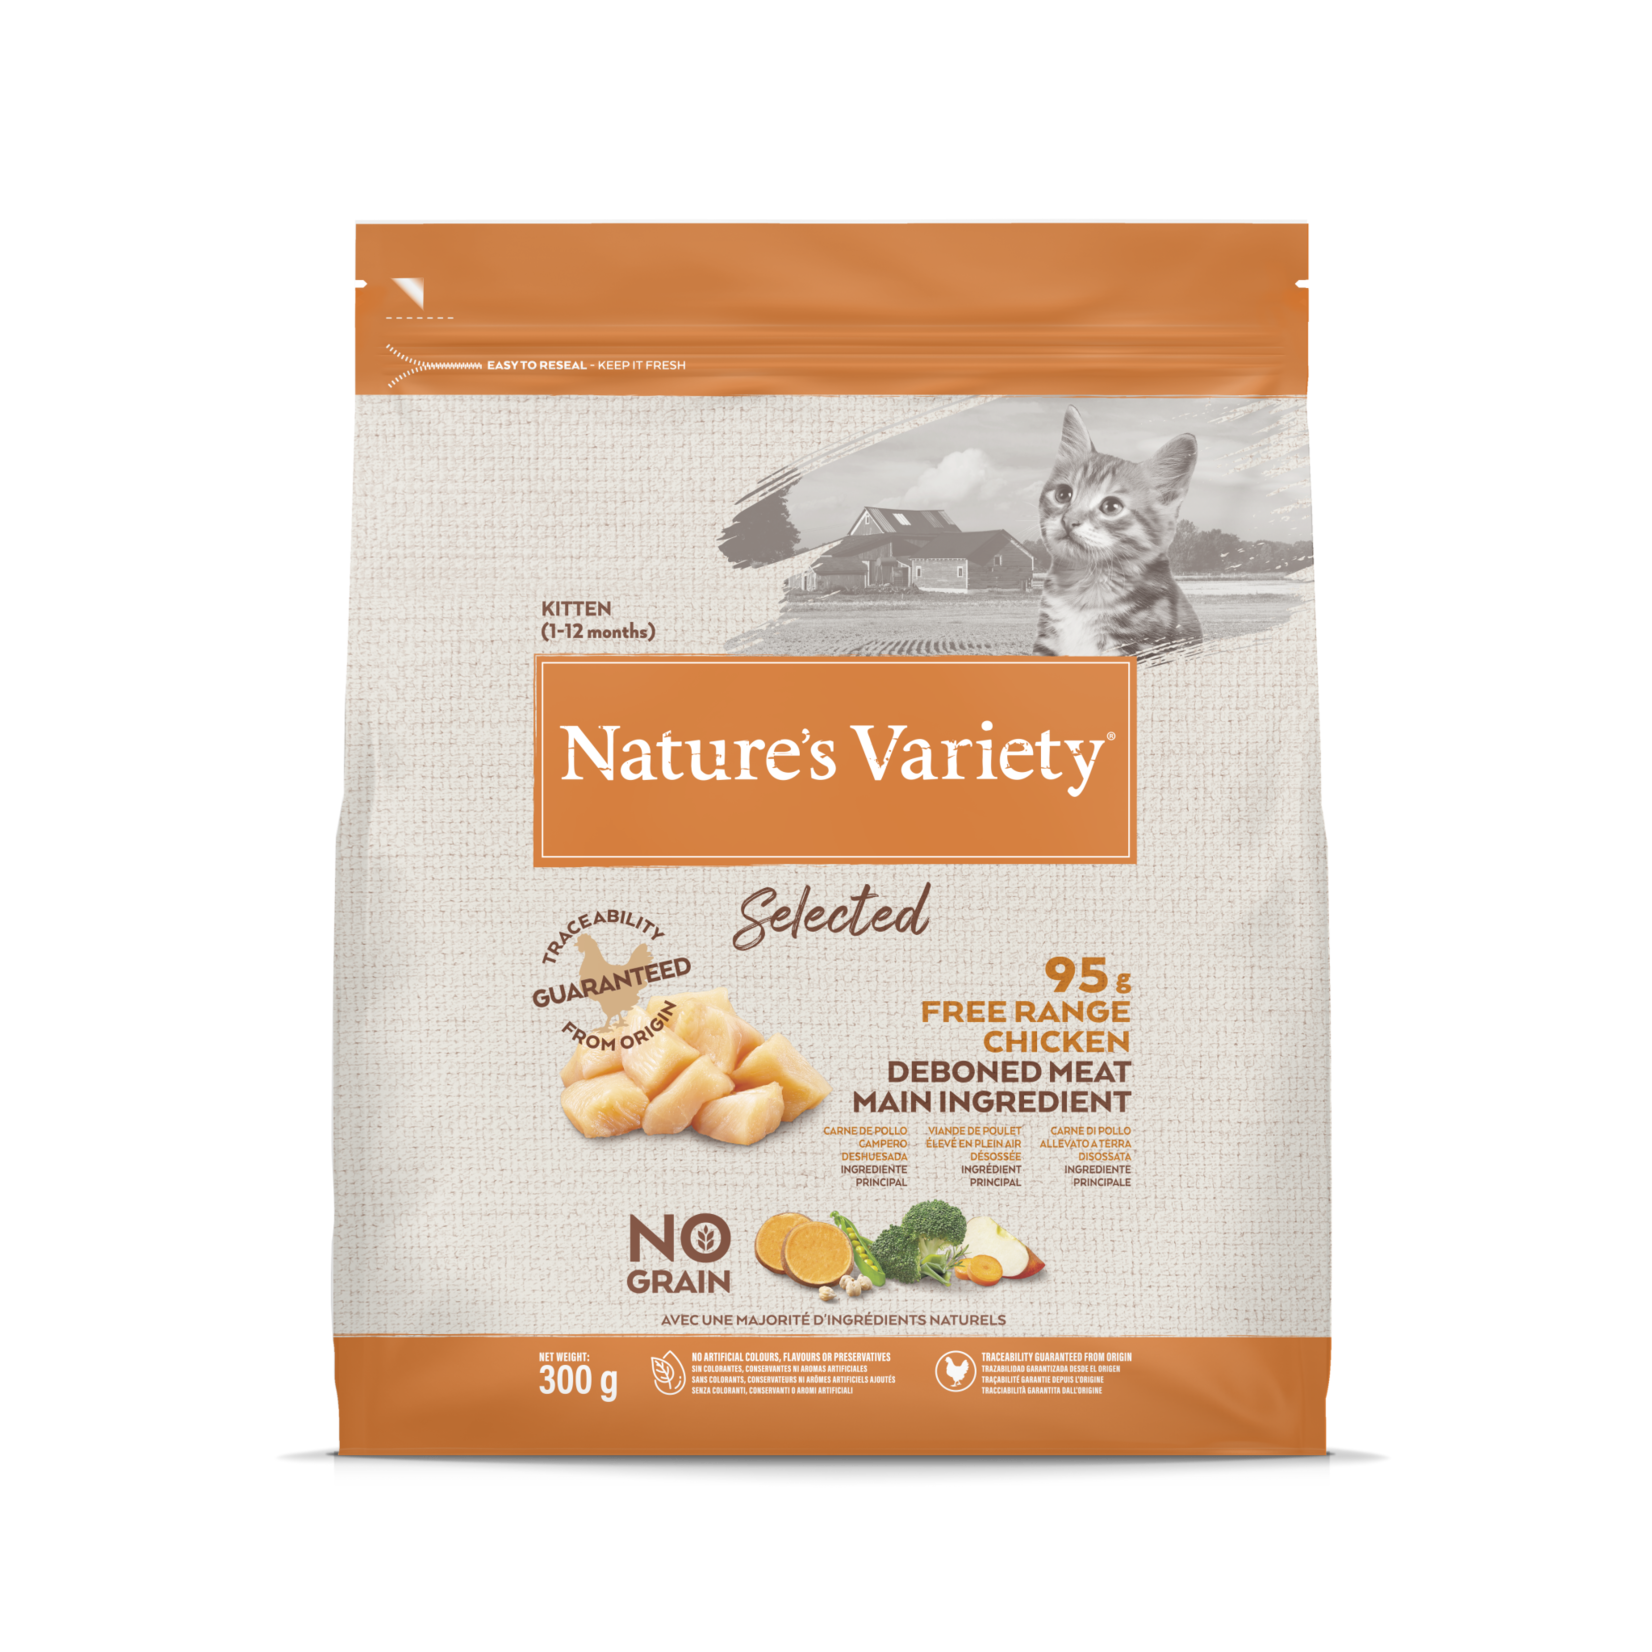 natures menu Nature's Variety Selected Kitten Food Grain Free Free Range Chicken